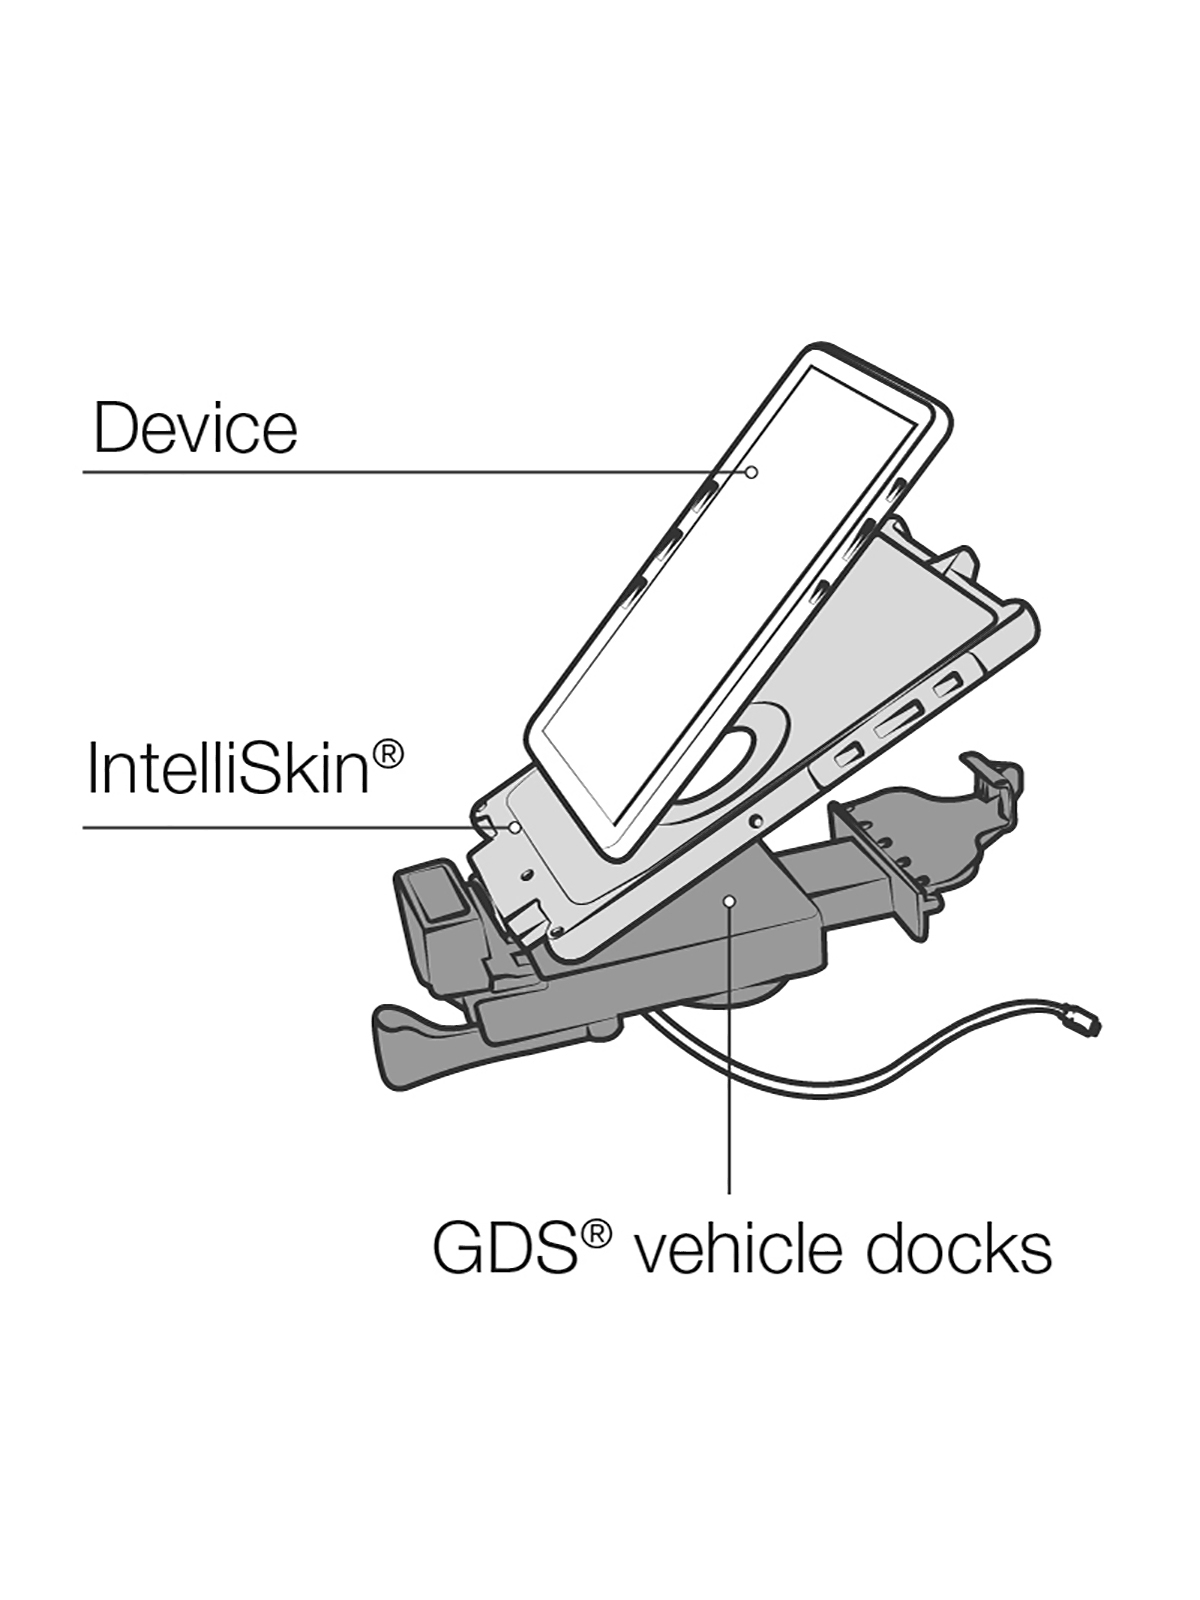 RAM Mounts GDS Fahrzeug Docking-Station für Apple iPad mini 6 in IntelliSkin Next Gen Lade-/Schutzhüllen - abschließbar, Single USB-A, USB-C, 15 W Ausgang, AMPS-Aufnahme